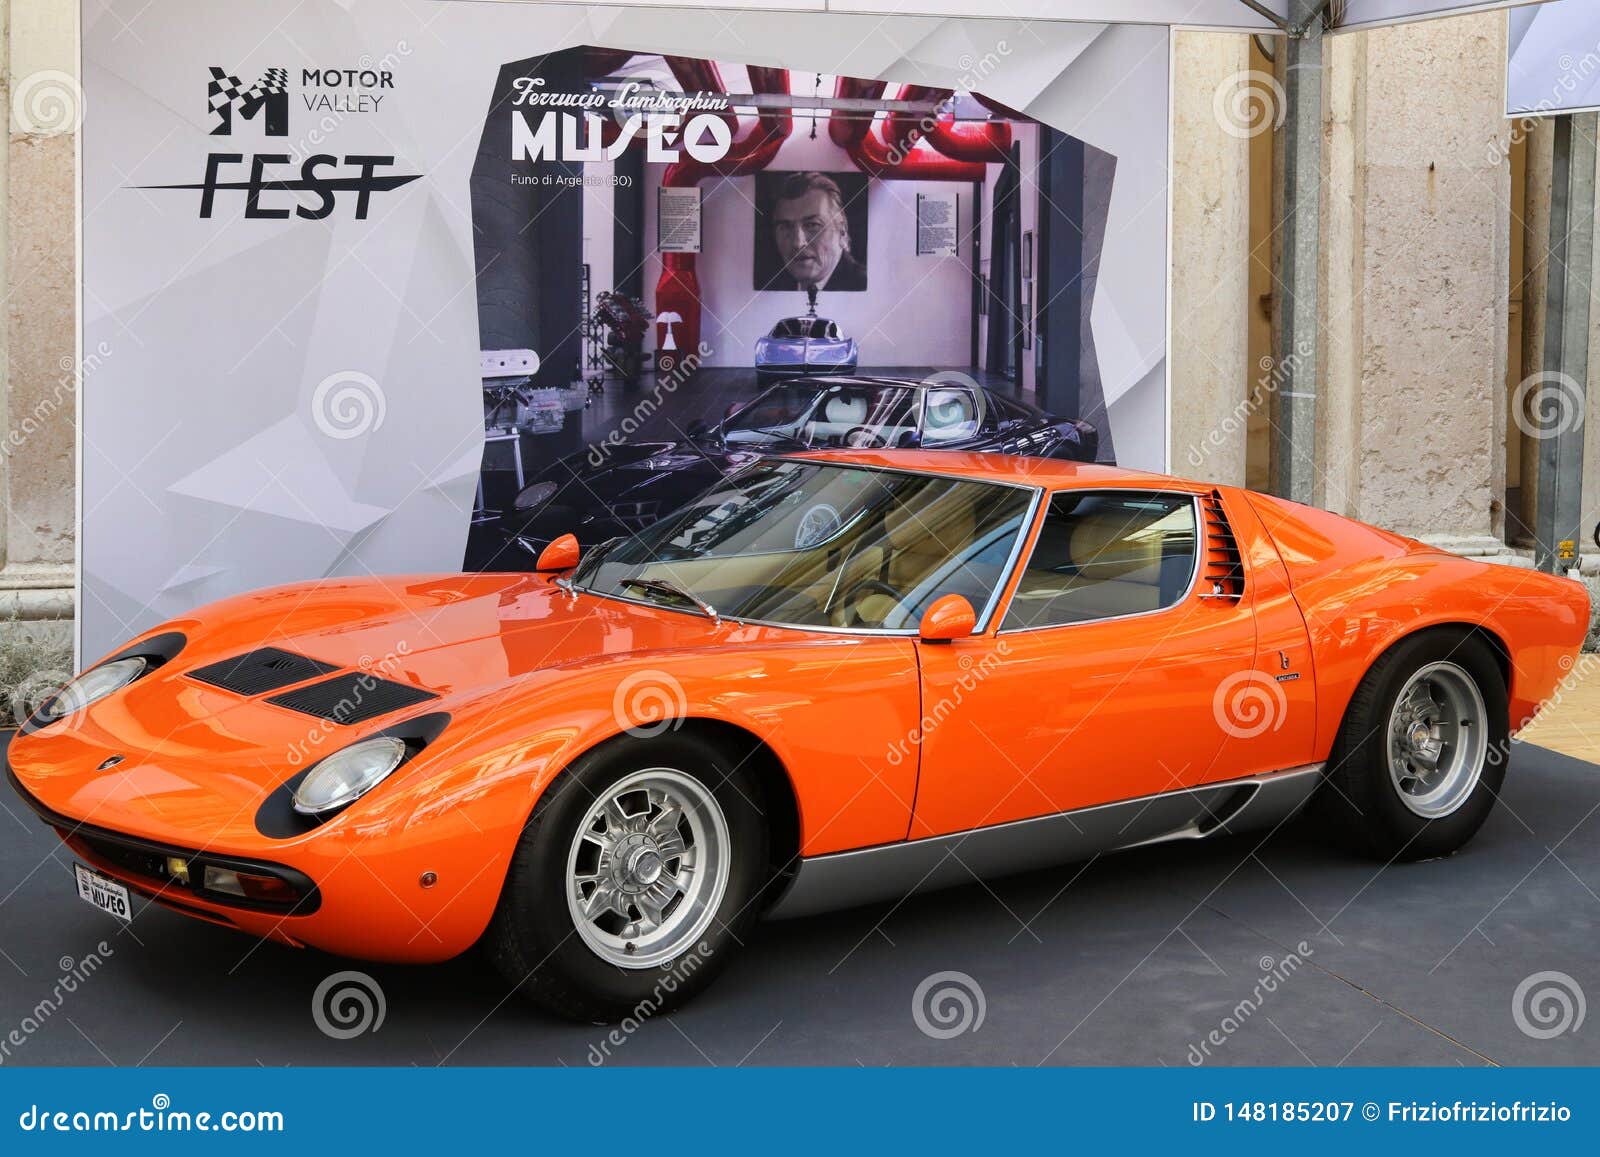 Lamborghini Miura Sportcar, Motor Valley Fest, Modena Editorial Photography  - Image of editorial, city: 148185207